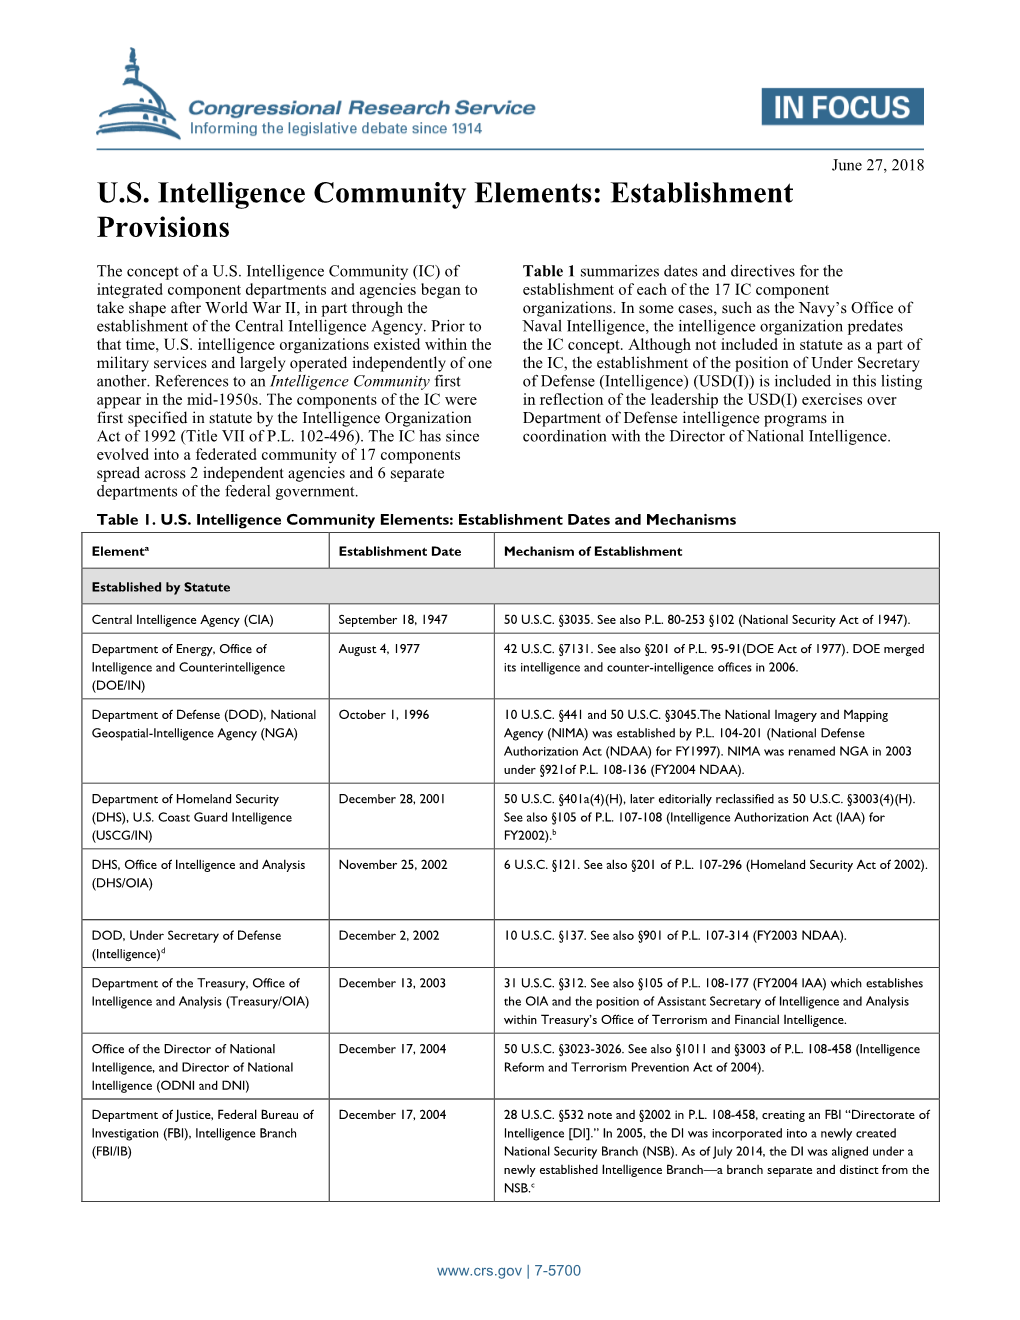 U.S. Intelligence Community Elements: Establishment Provisions